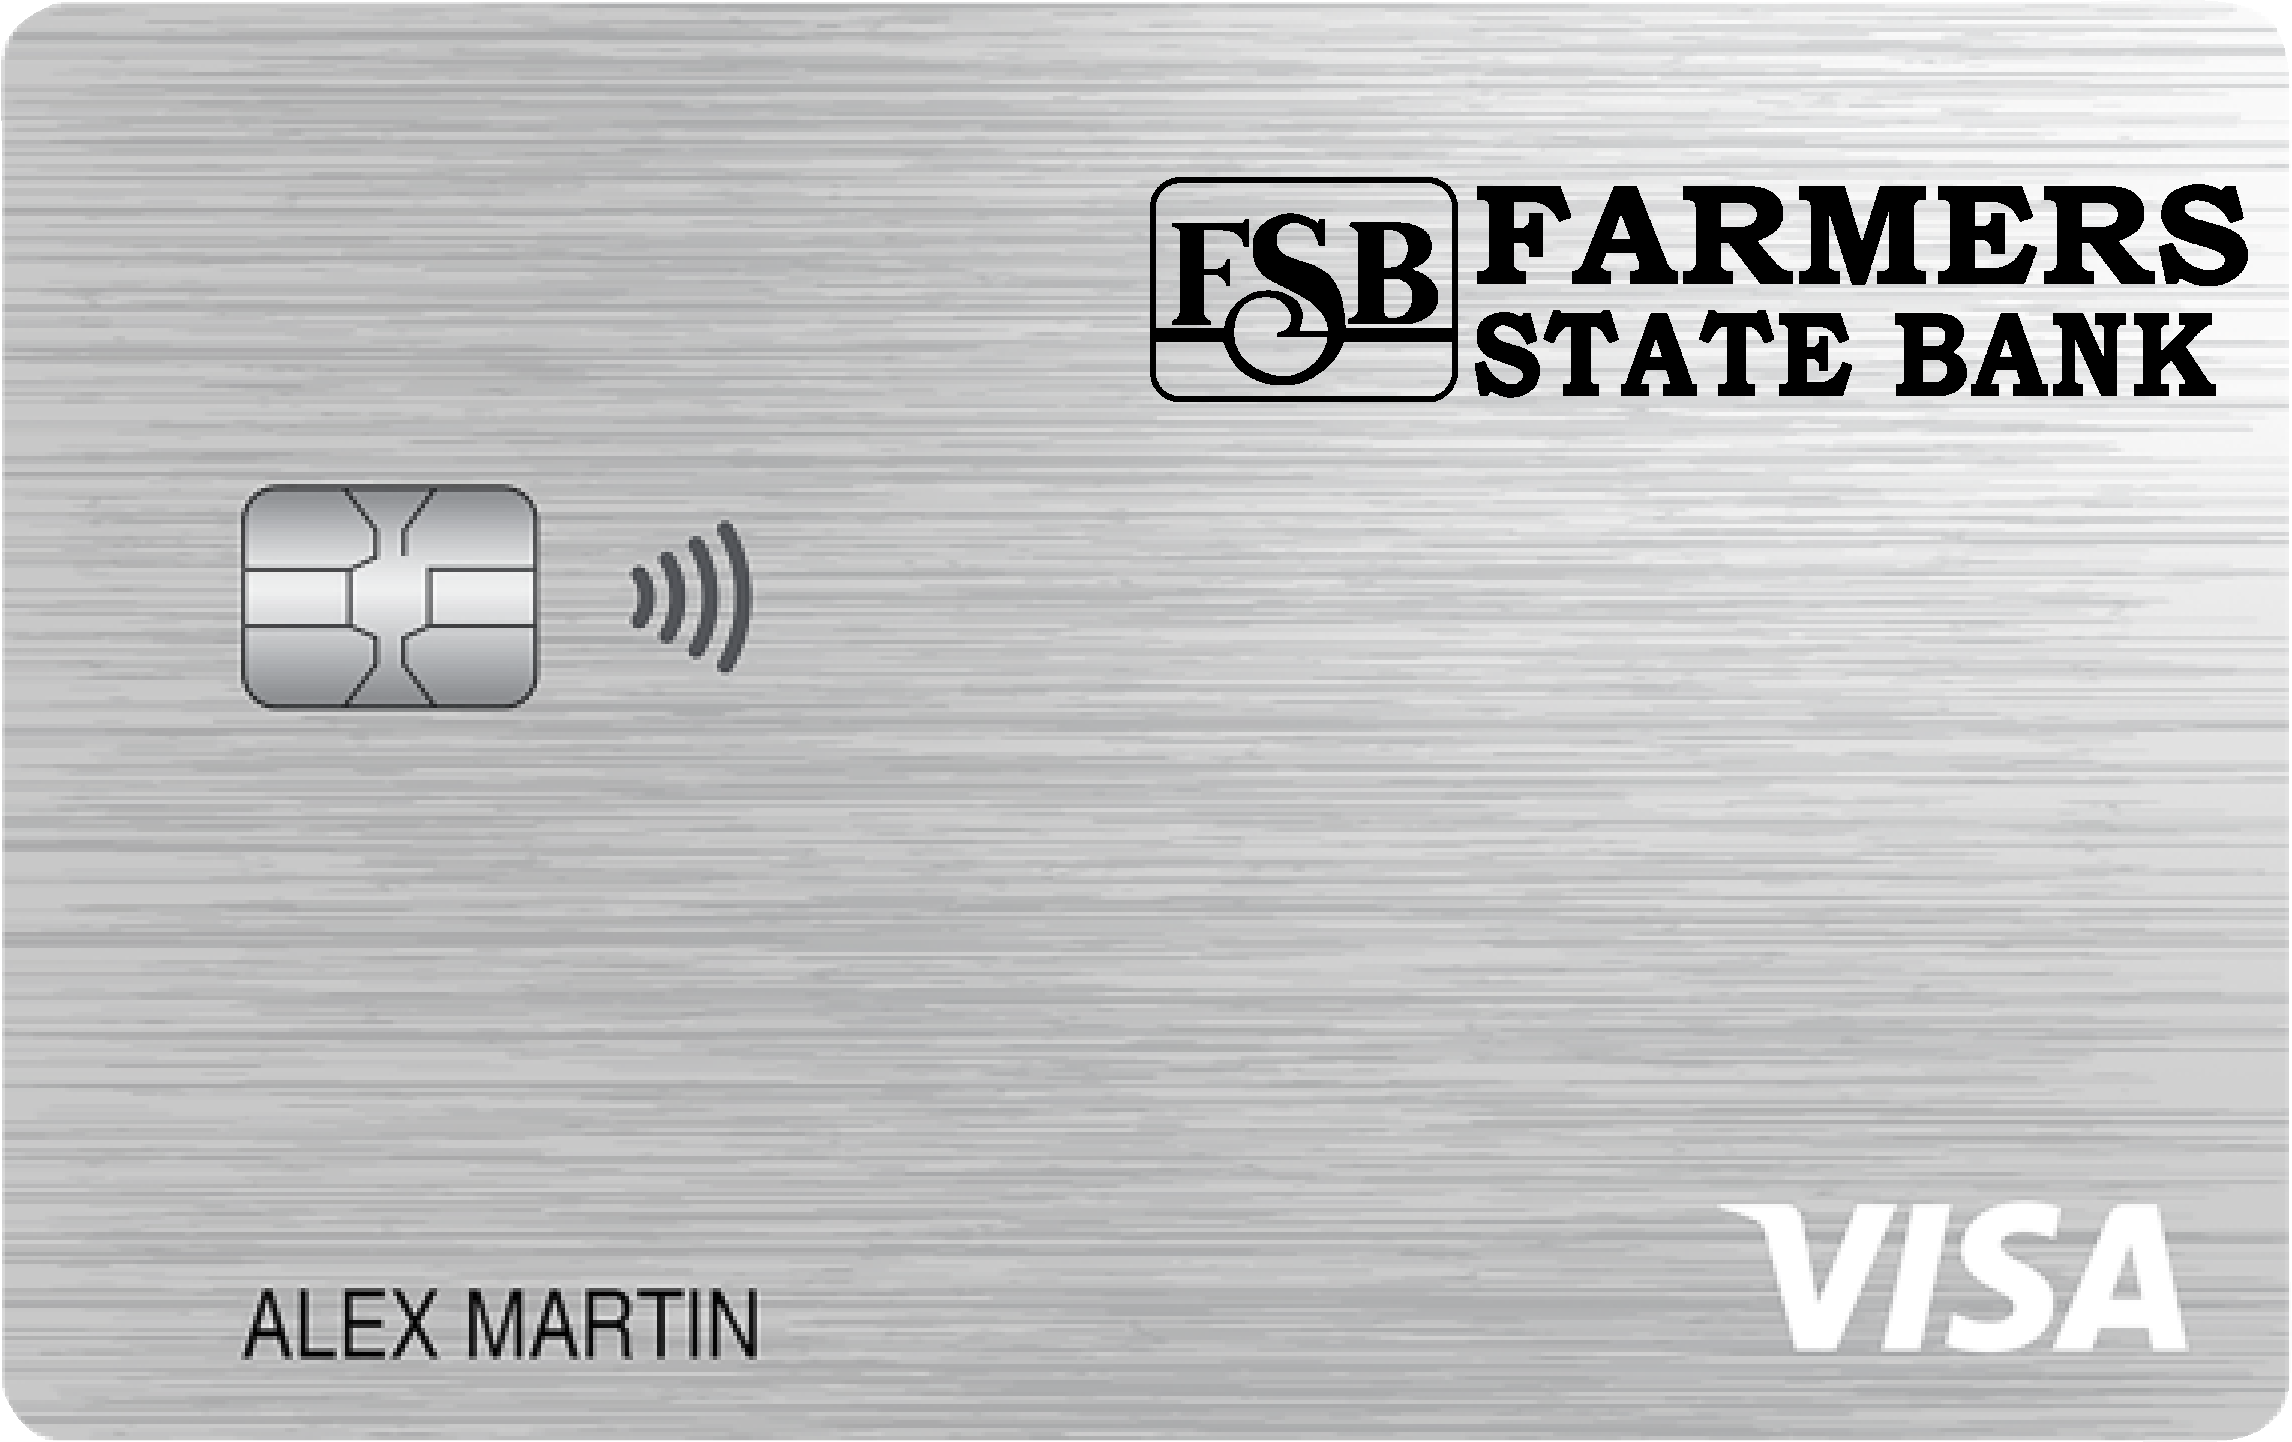 Farmers State Bank Platinum Card